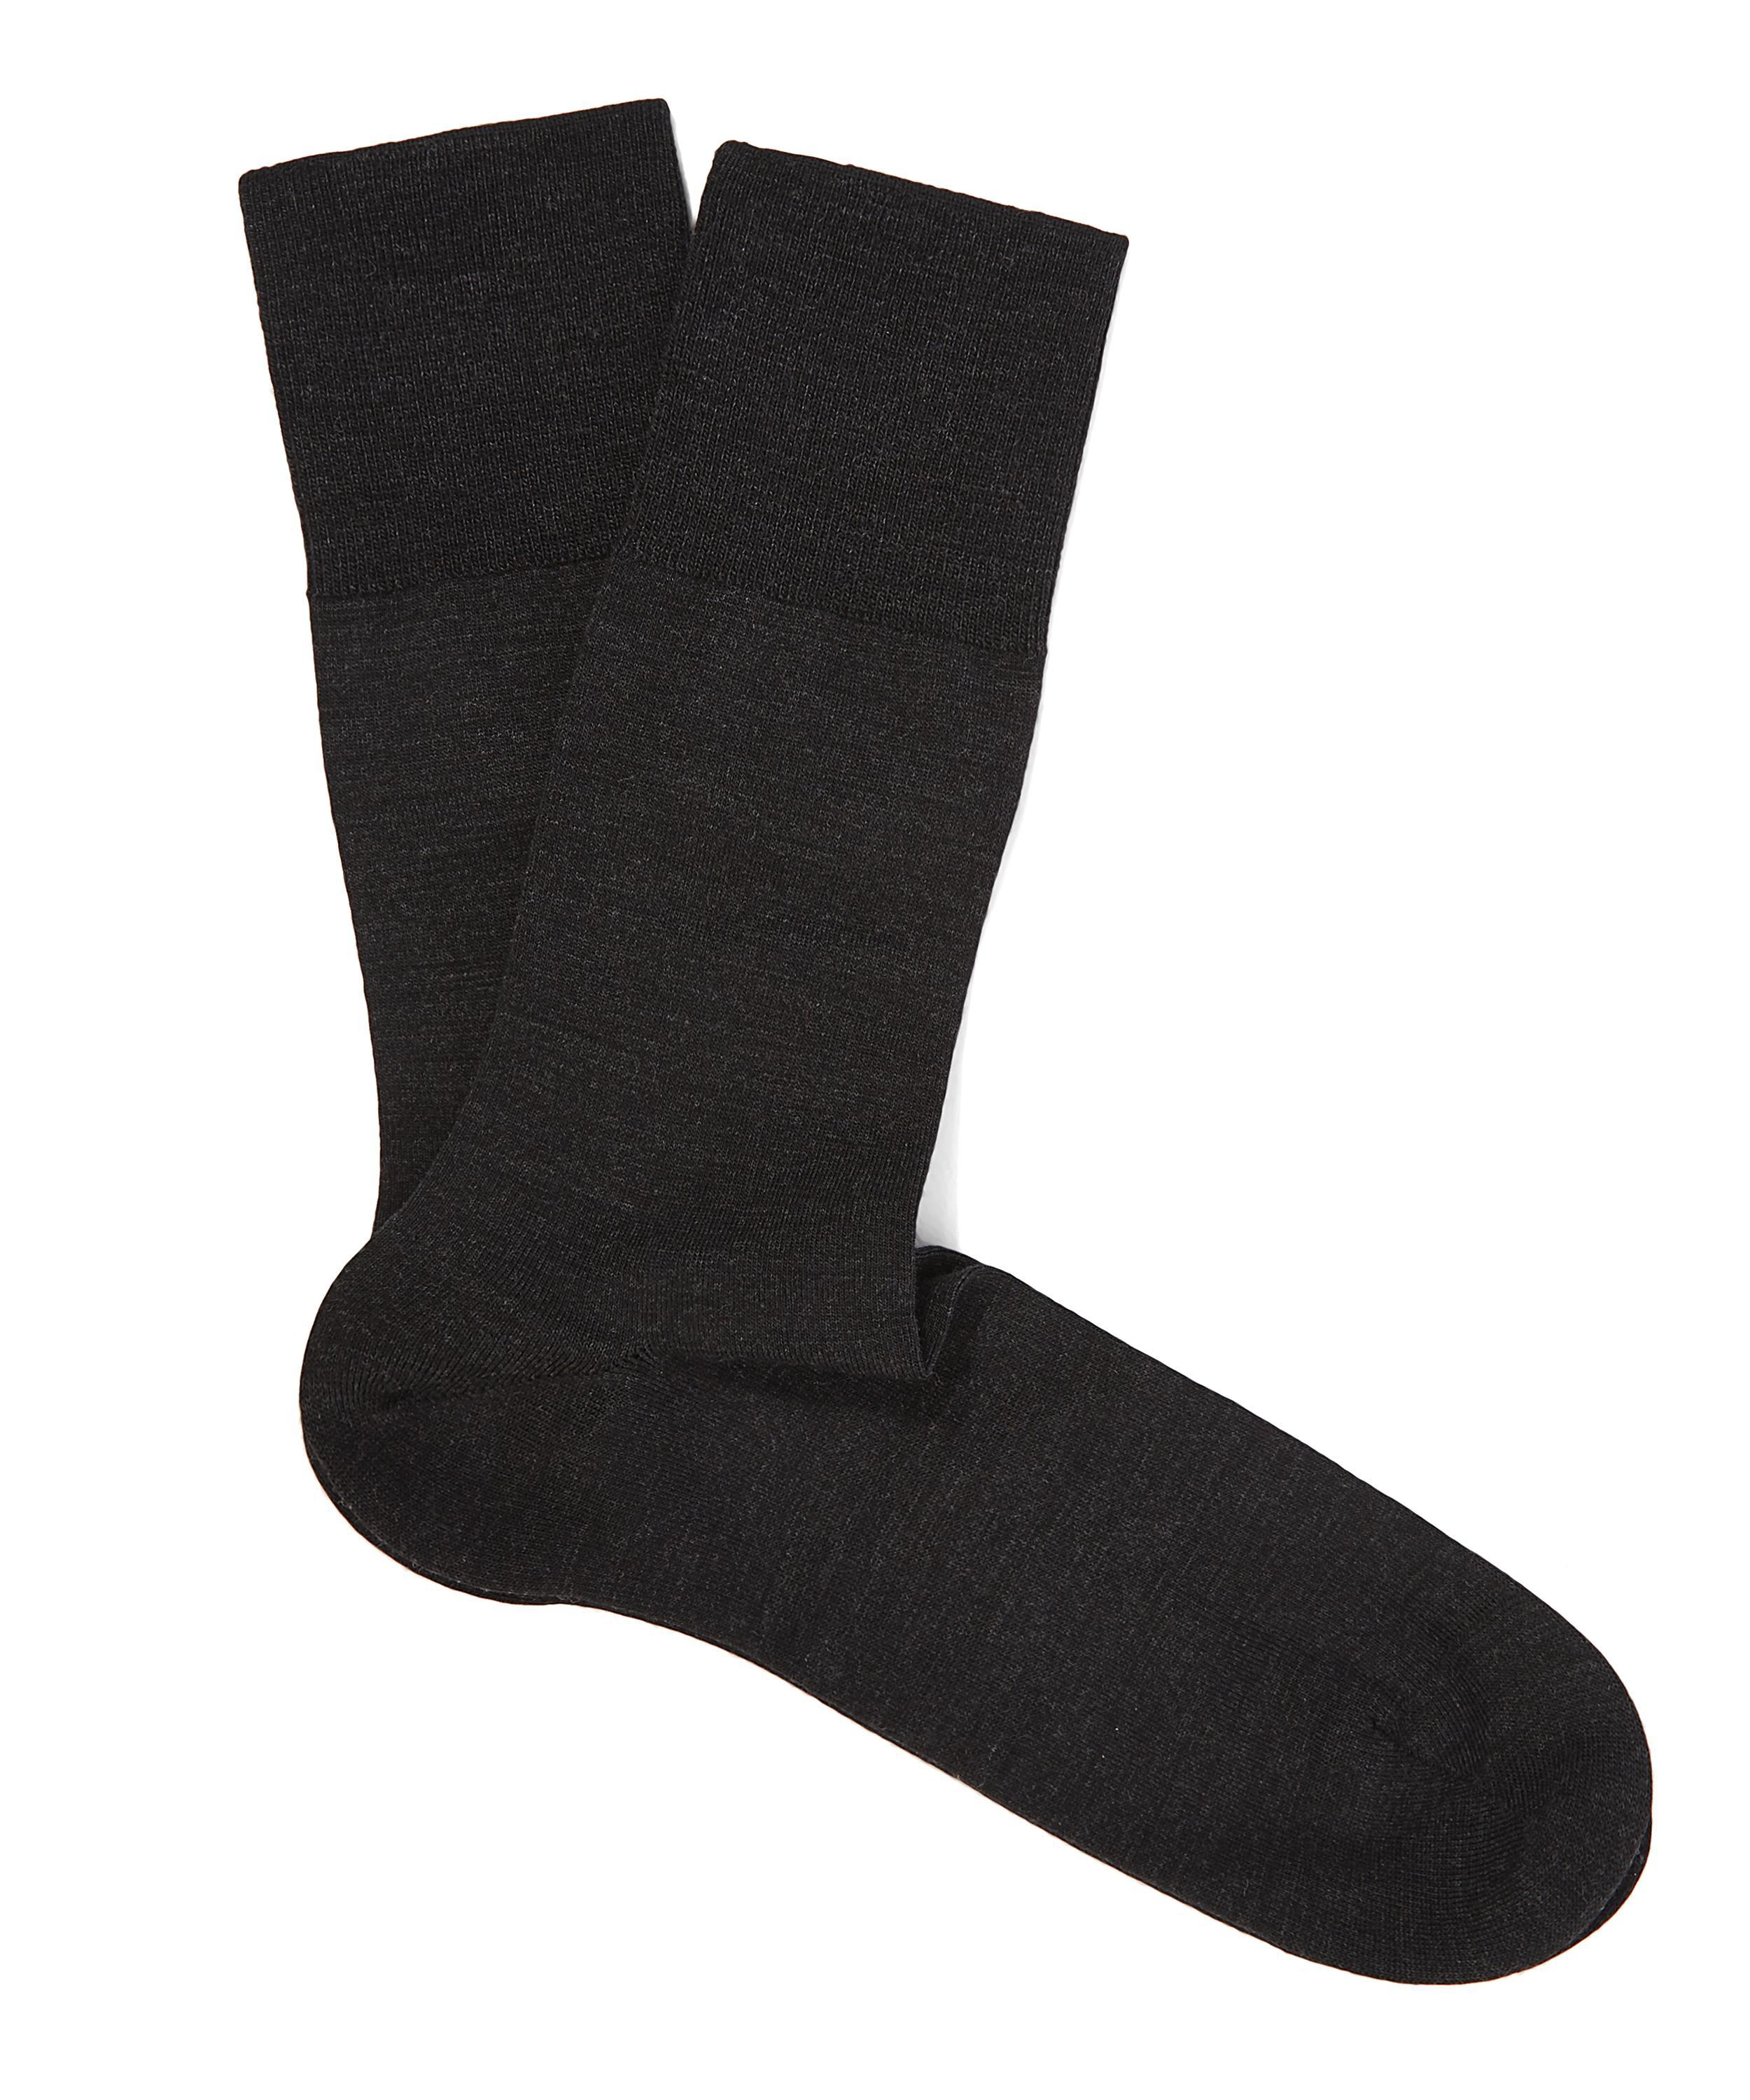 Falke Wool Airport Socks in Gray for Men - Save 6% - Lyst